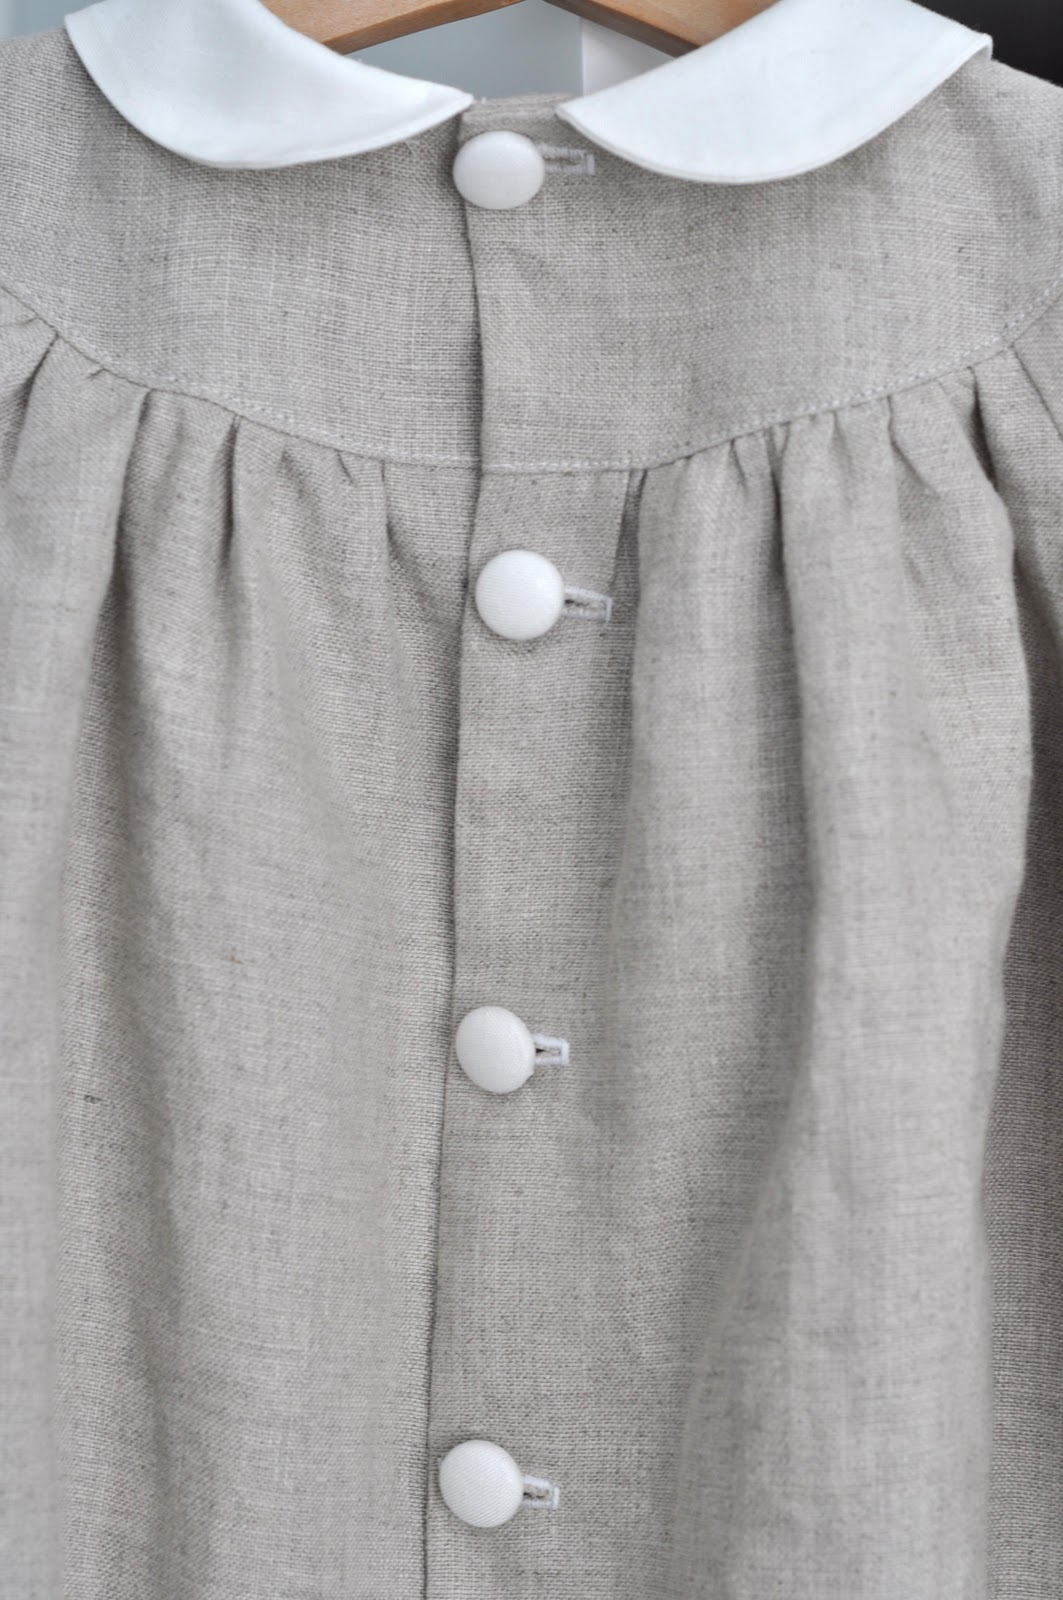 Aesthetic Nest: Sewing: Modern Farm Birthday Dress